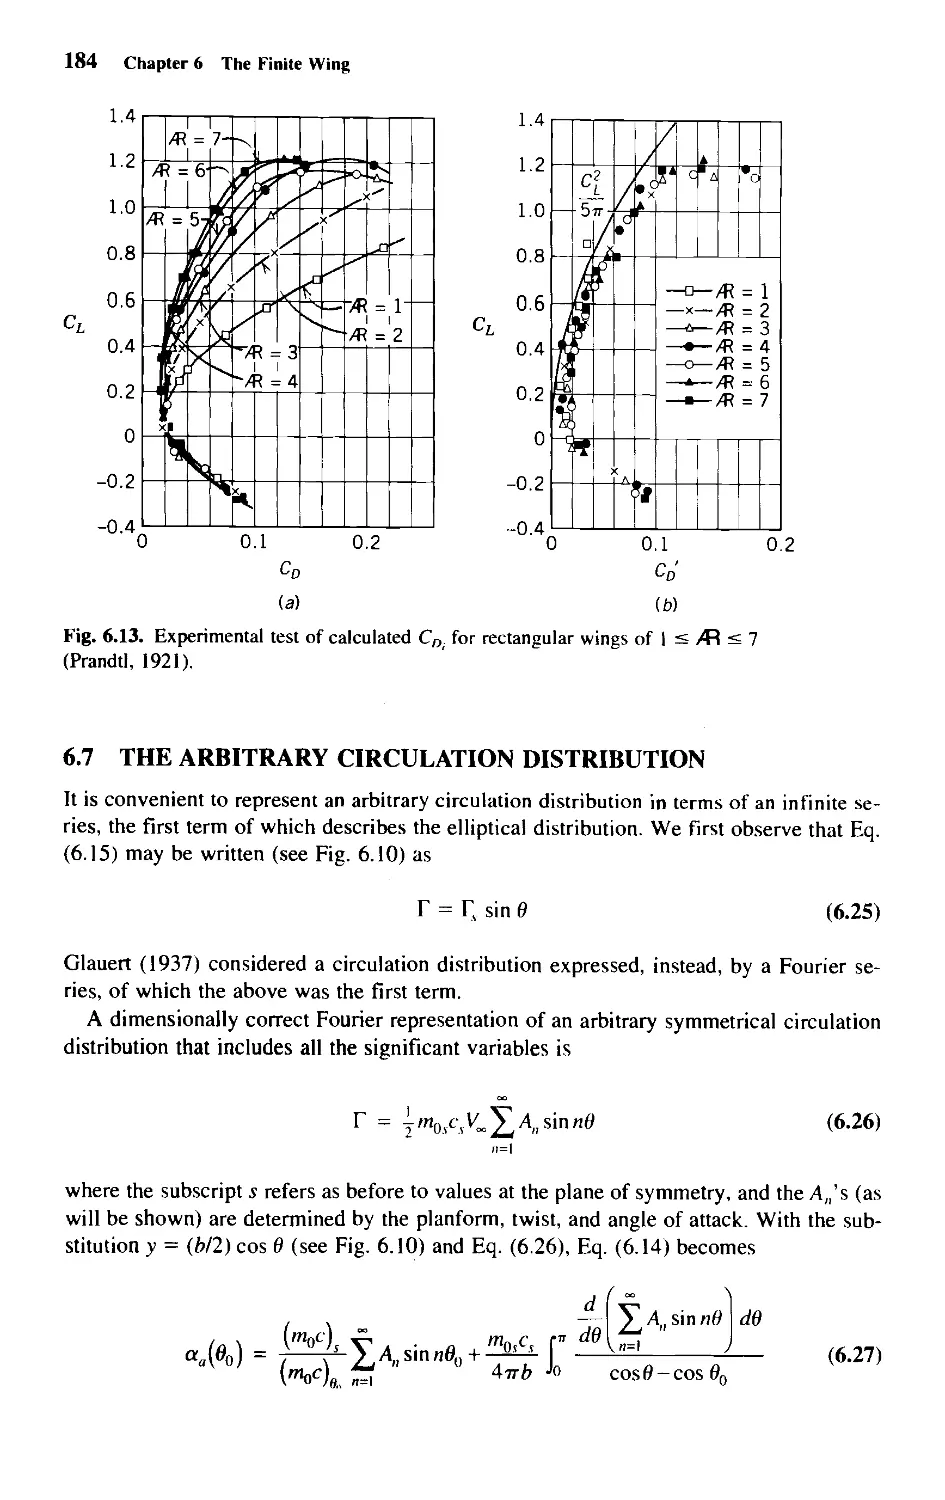 6.7 - The Arbitrary Circulation Distribution